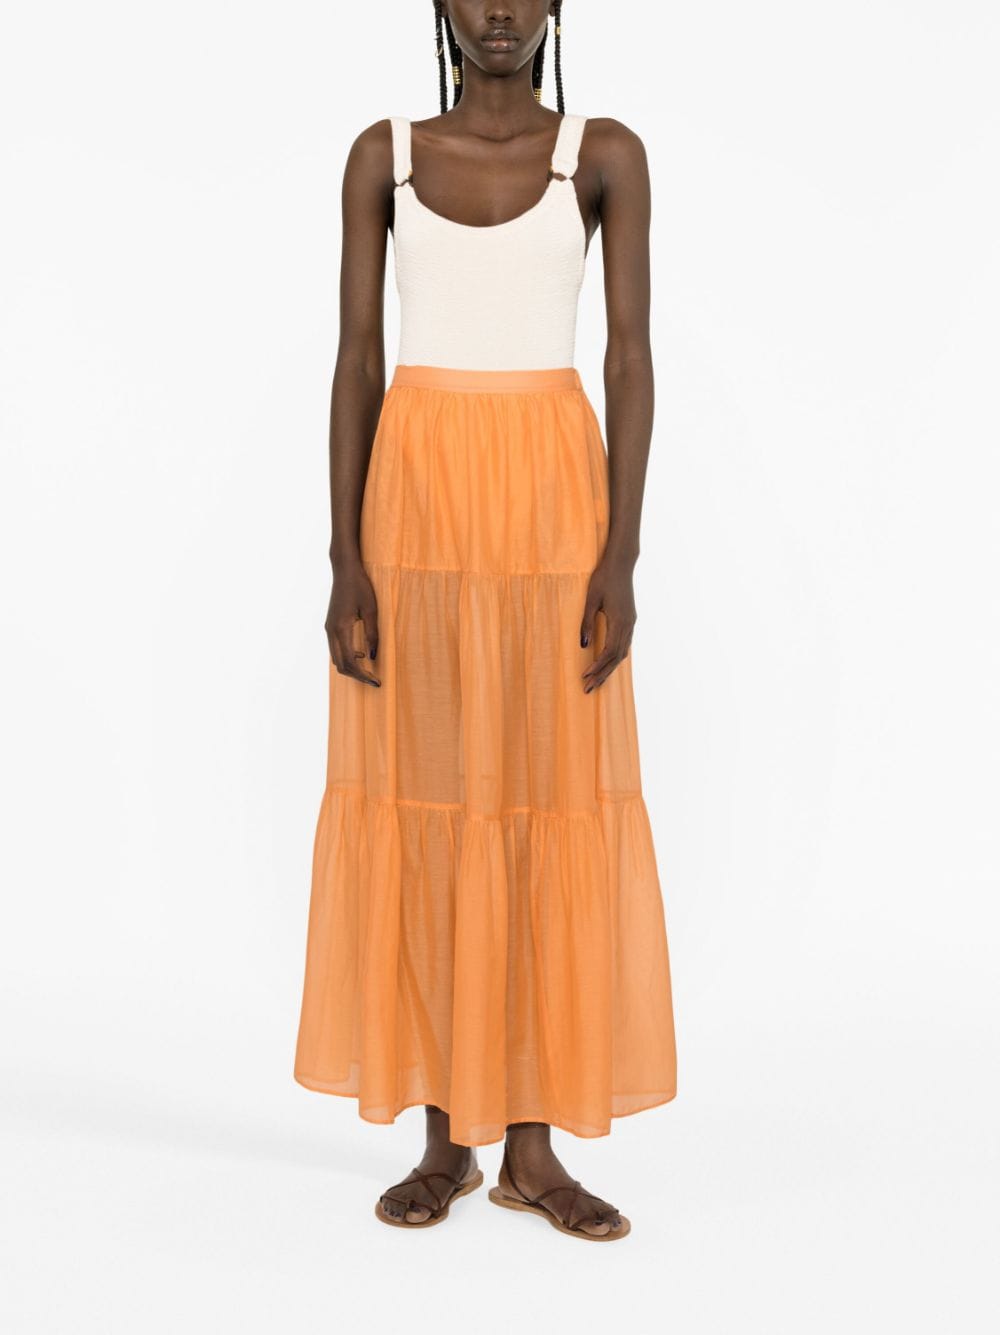 Manebi Skirts Orange